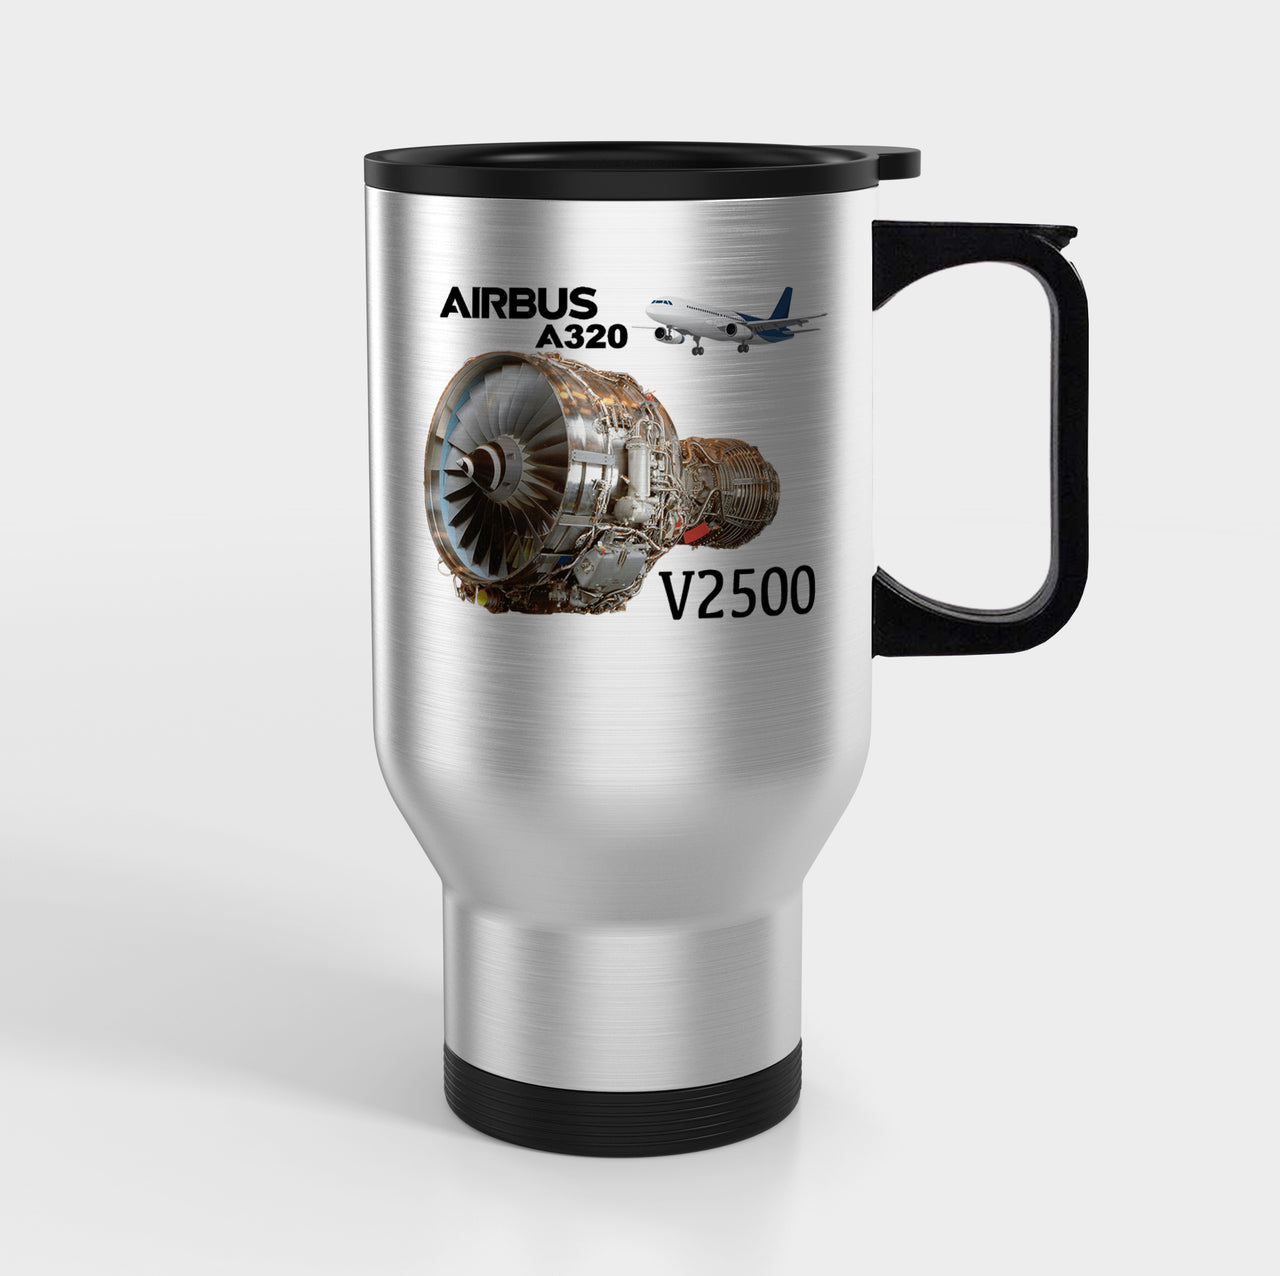 Airbus A320 & V2500 Engine Designed Travel Mugs (With Holder)